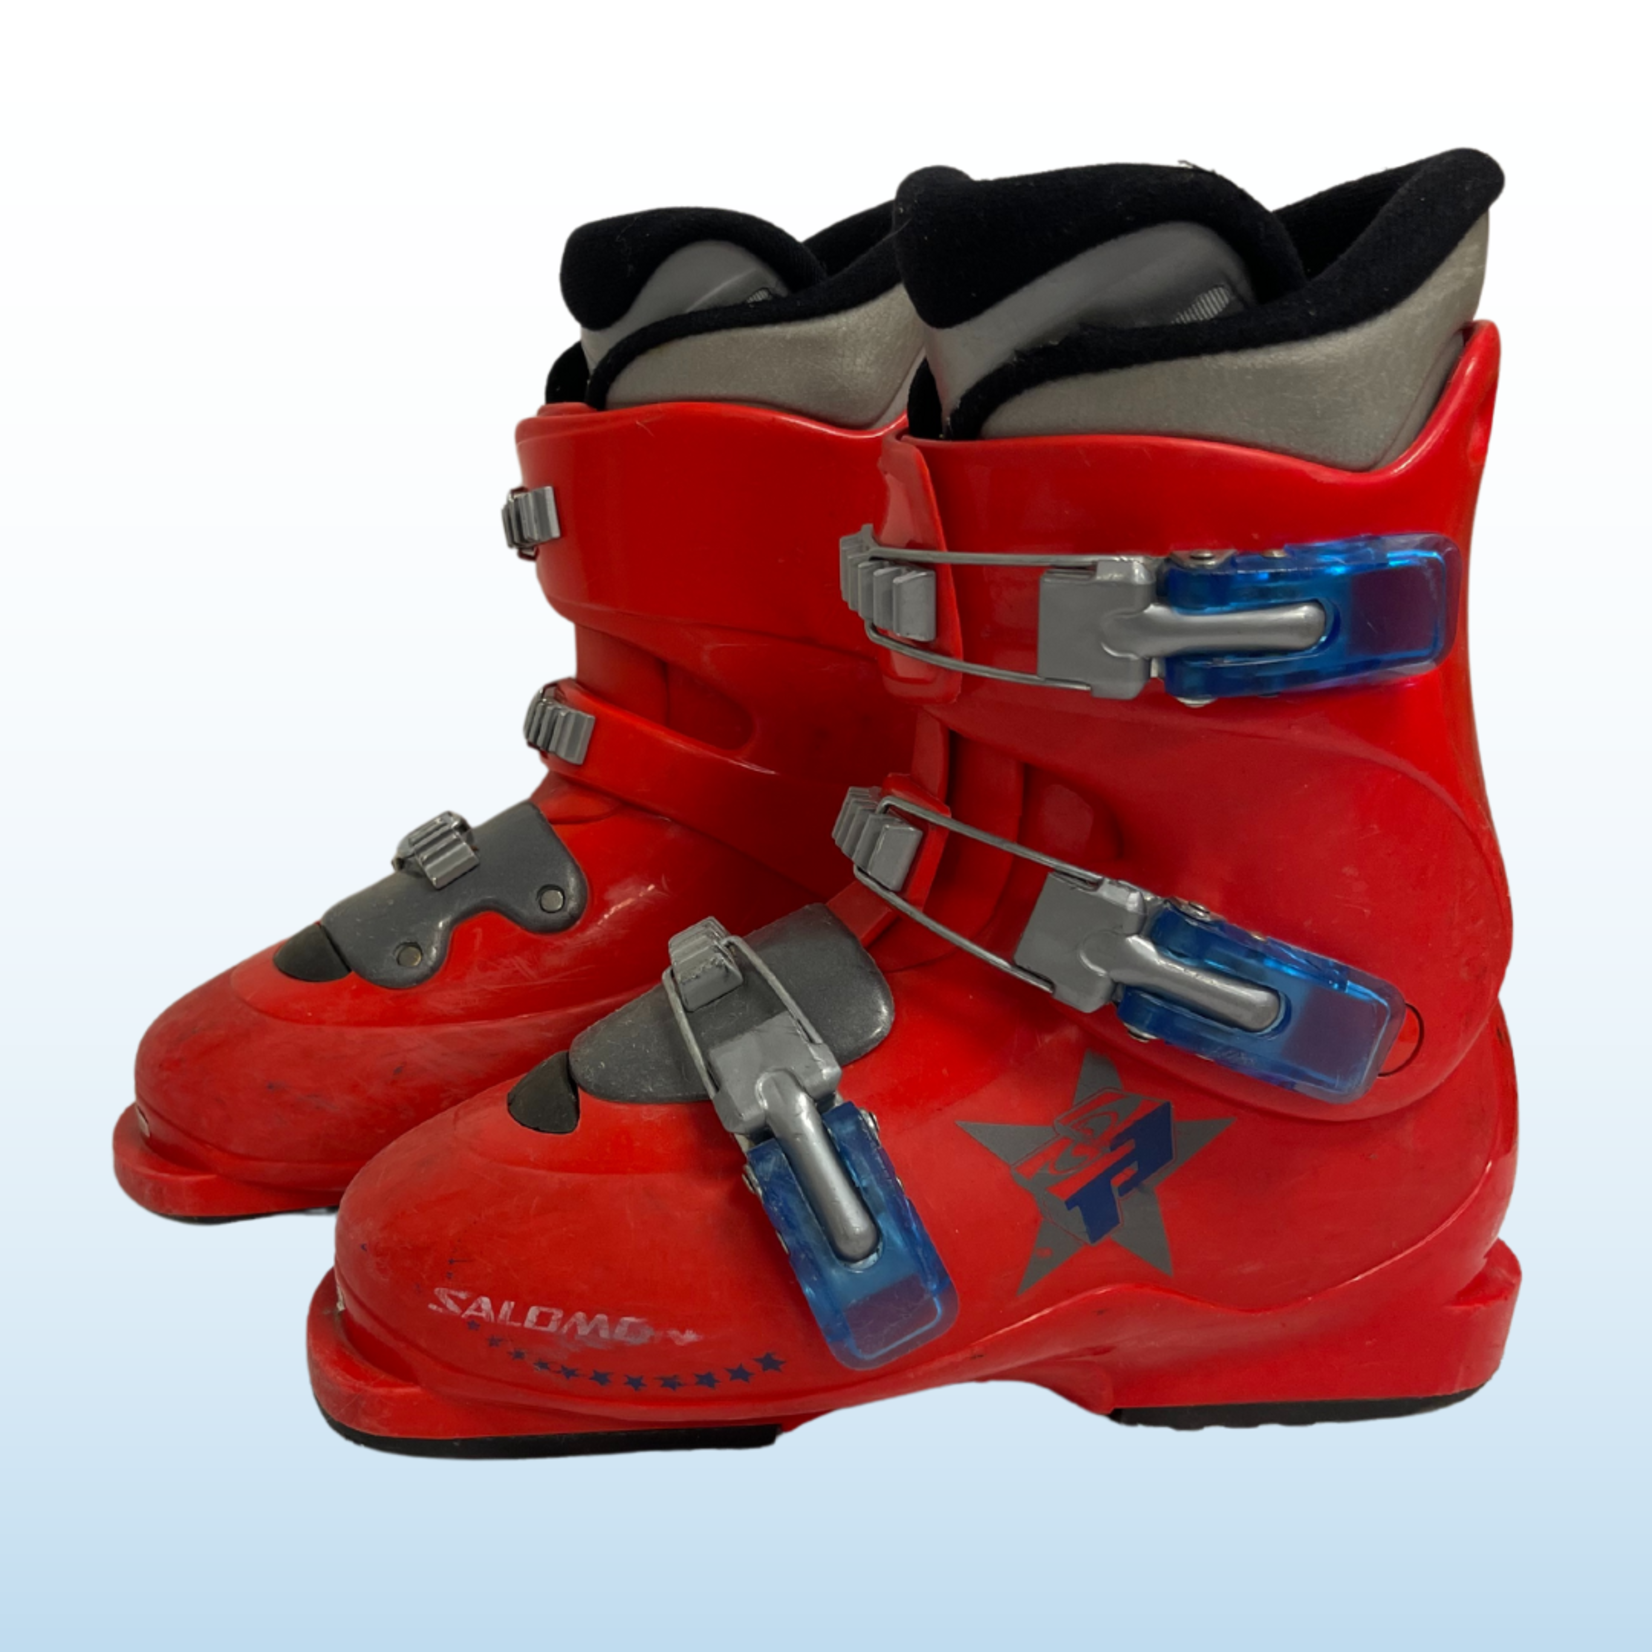 Salomon Salomon Performa T3 Kids Ski Boots, Size 24.5